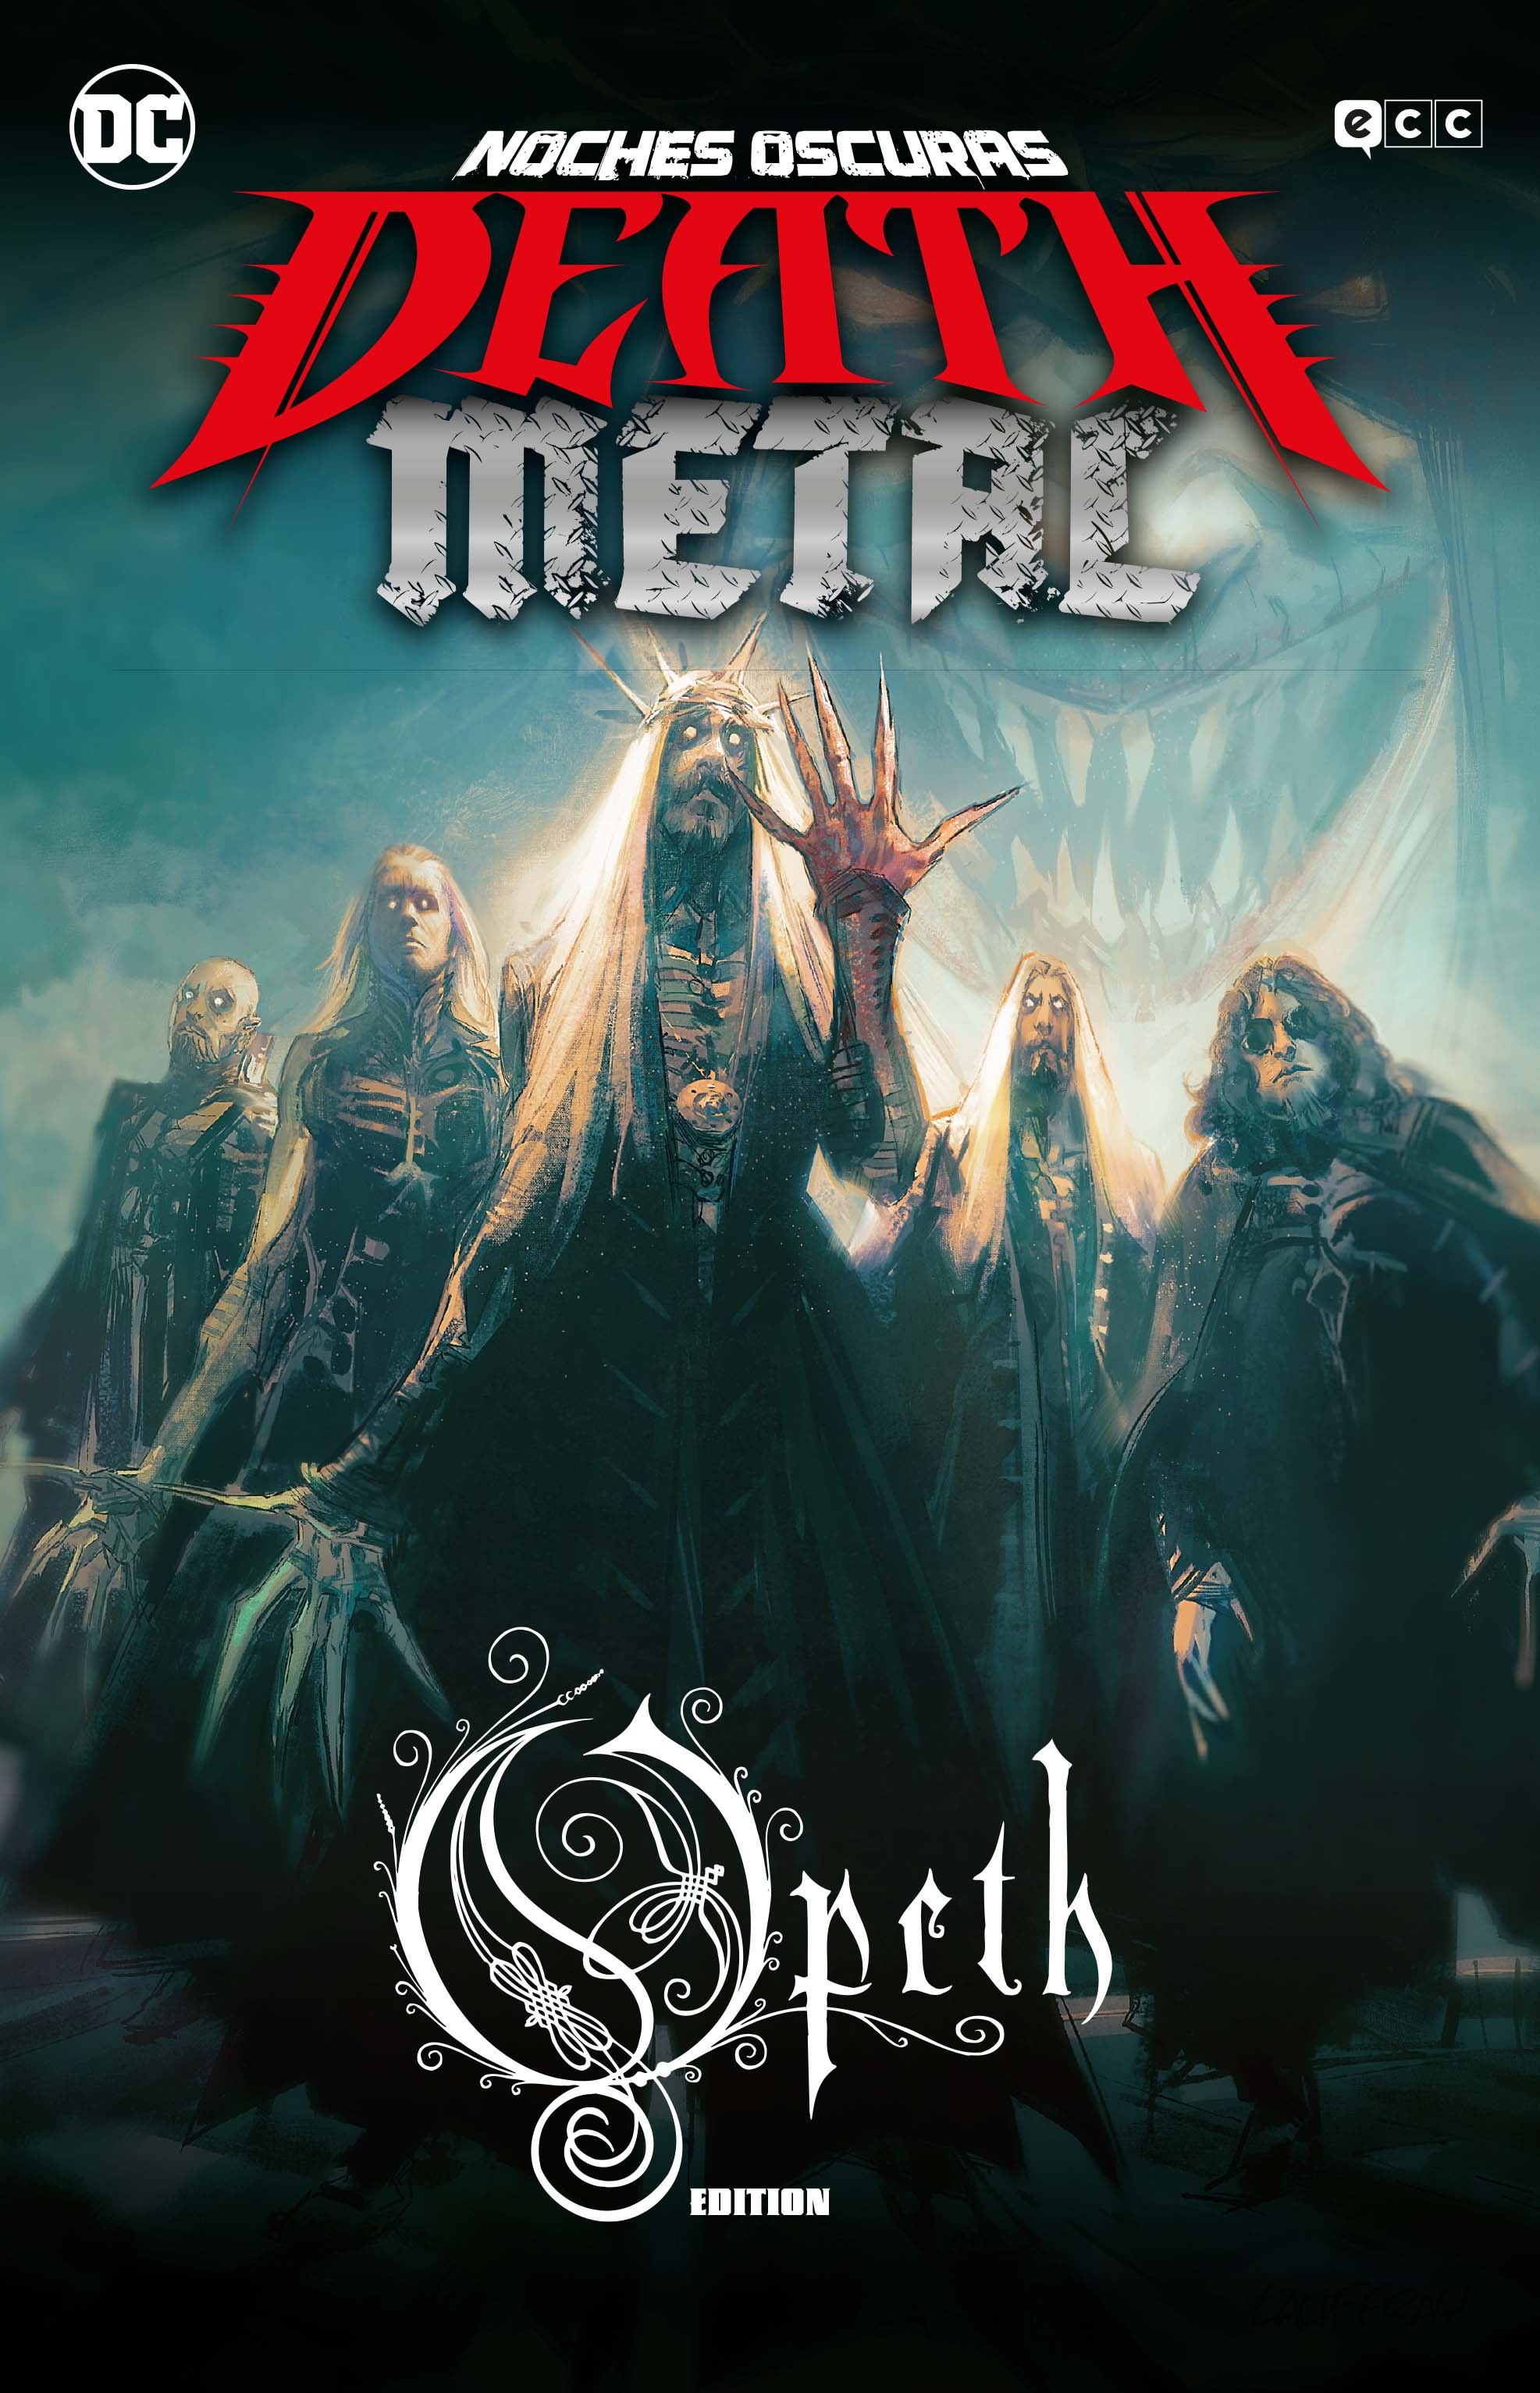 ECC - Noches oscuras: Death Metal núm. 4 (Opeth Band Edition) (Rústica)